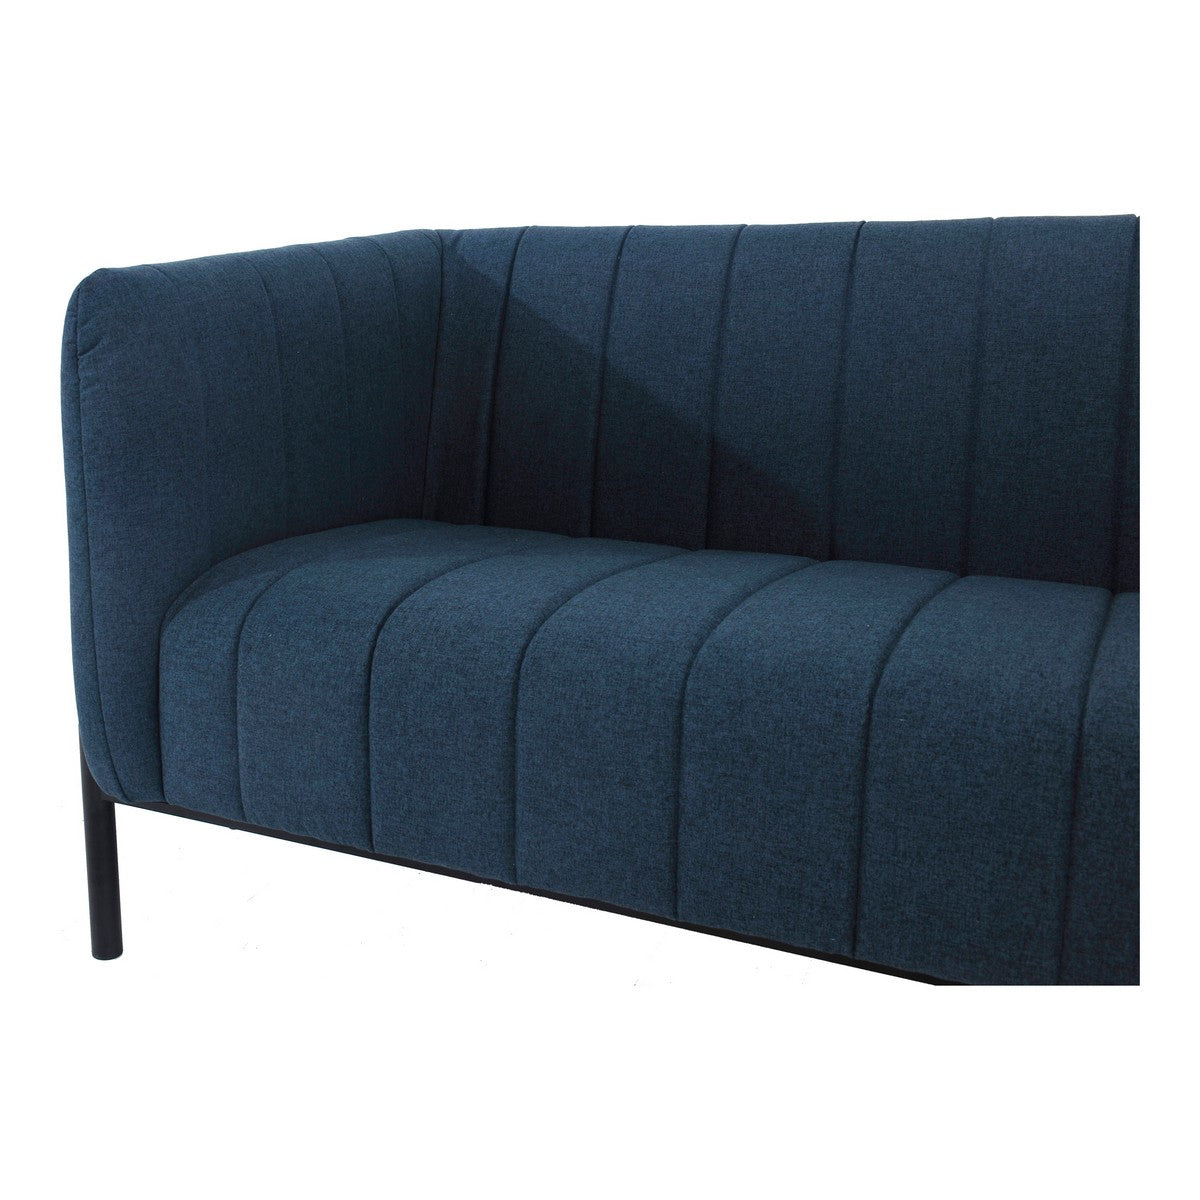 Moe's Home Collection Jaxon Dark Blue Sofa - VV-1002-19